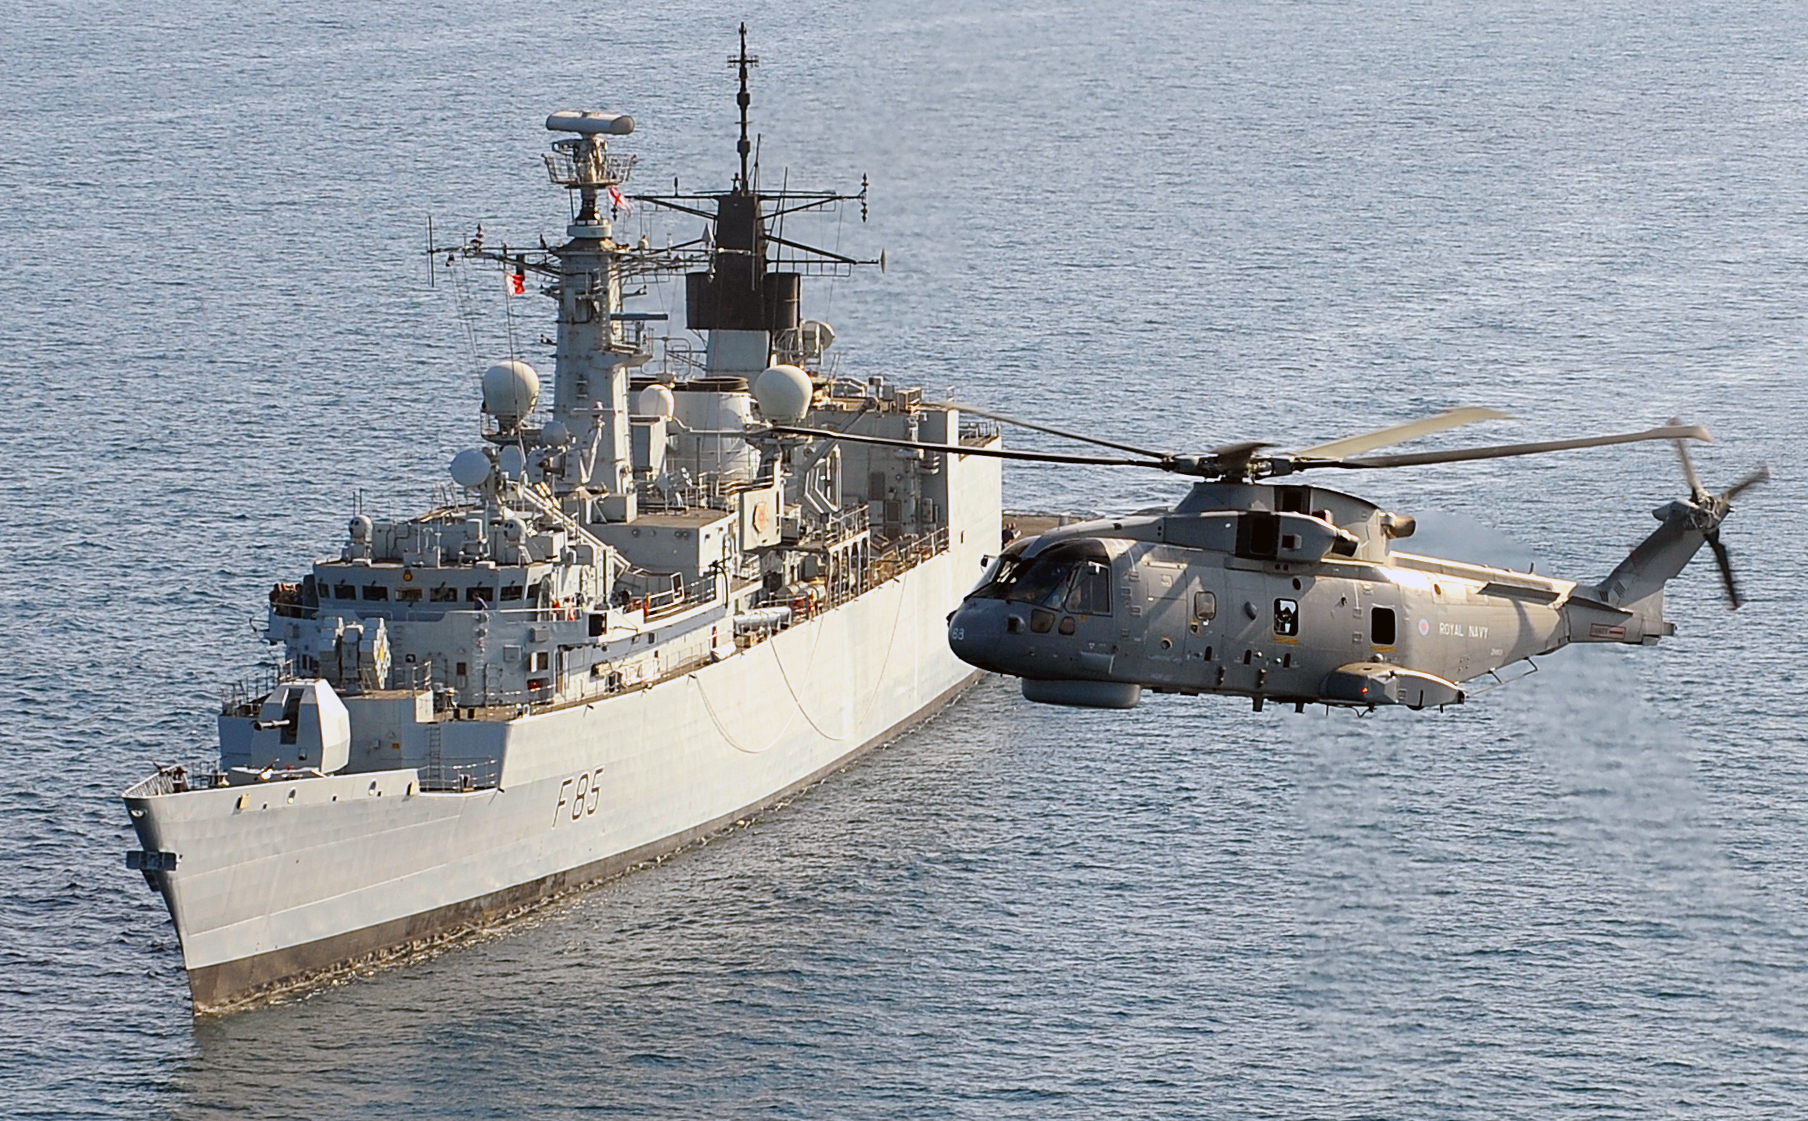 File:Merlin Flies over HMS Cumberland MOD 45150938.jpg - Wikimedia ...